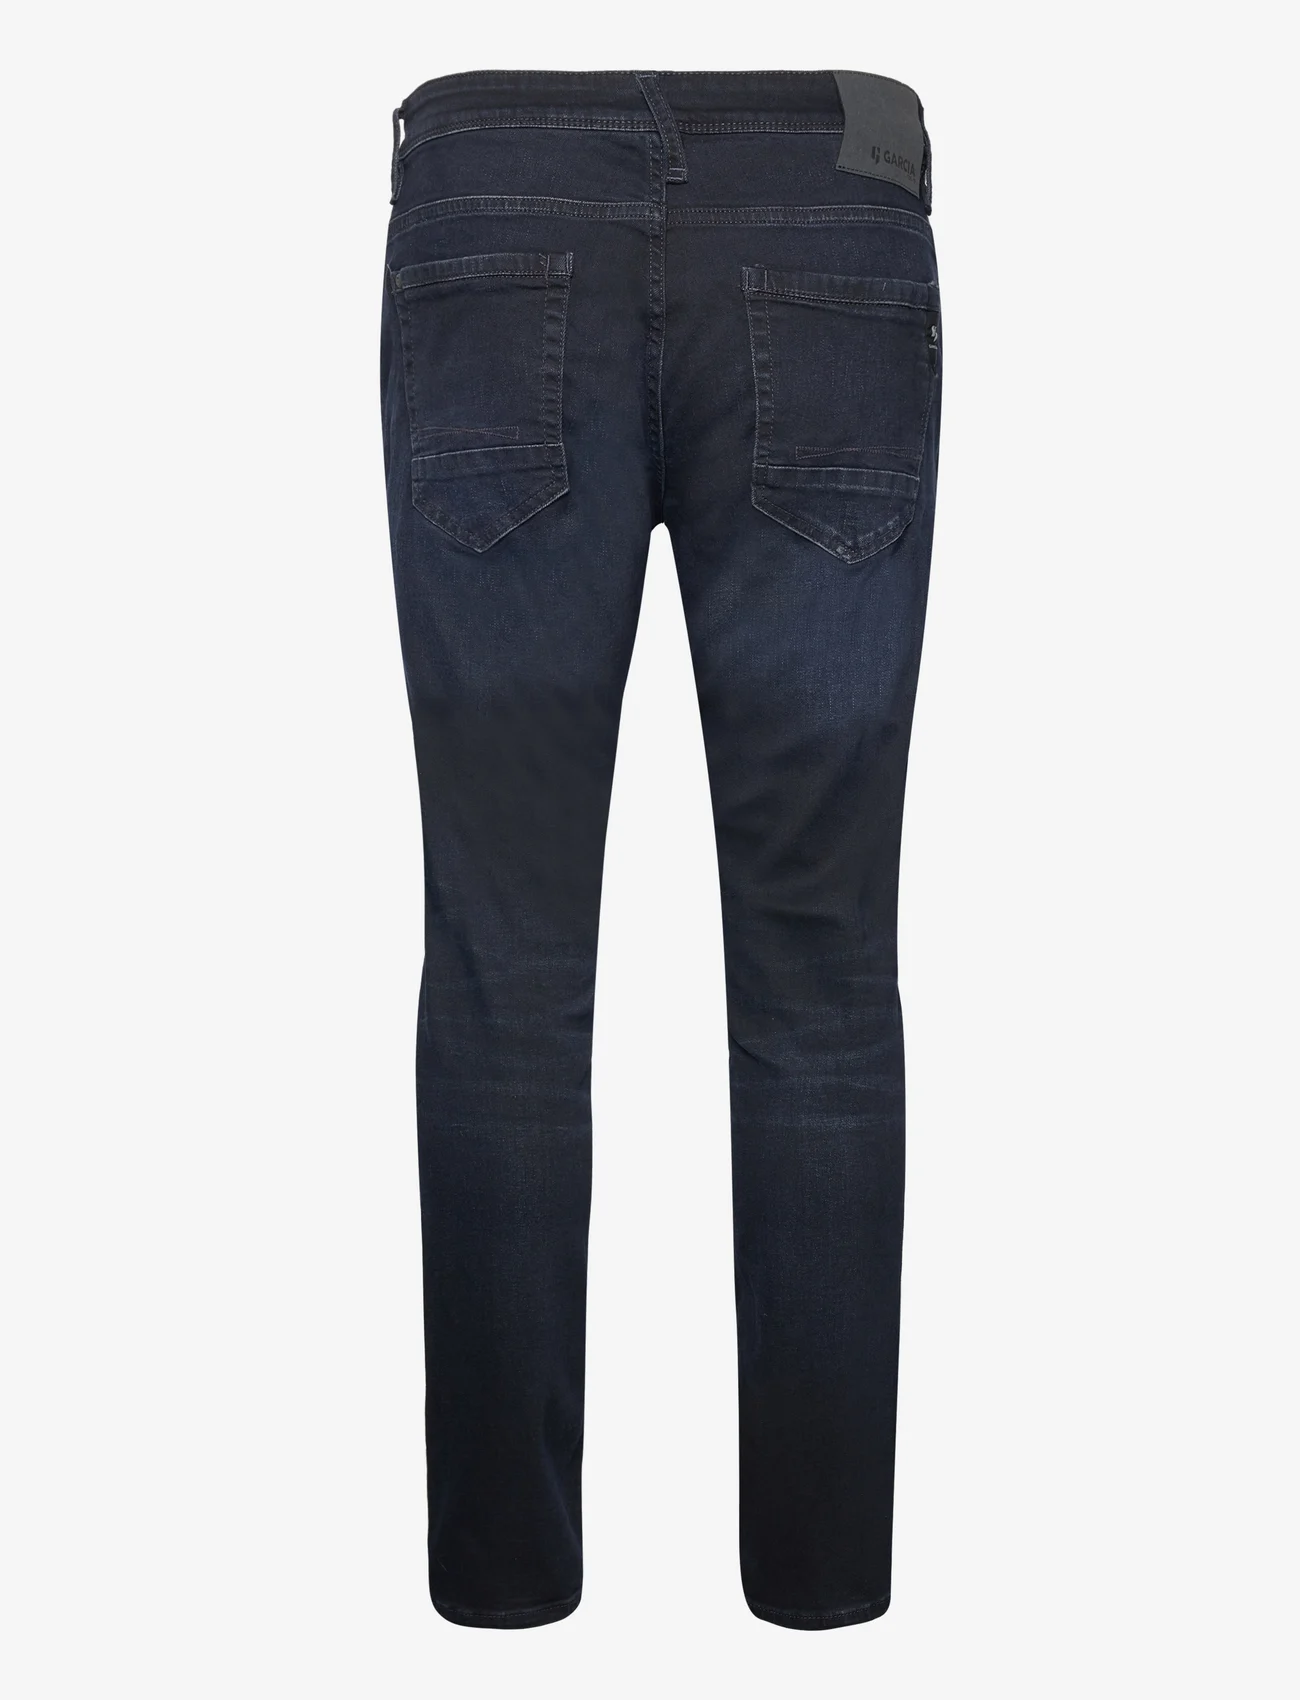 Garcia - Savio - slim fit jeans - blue - 1